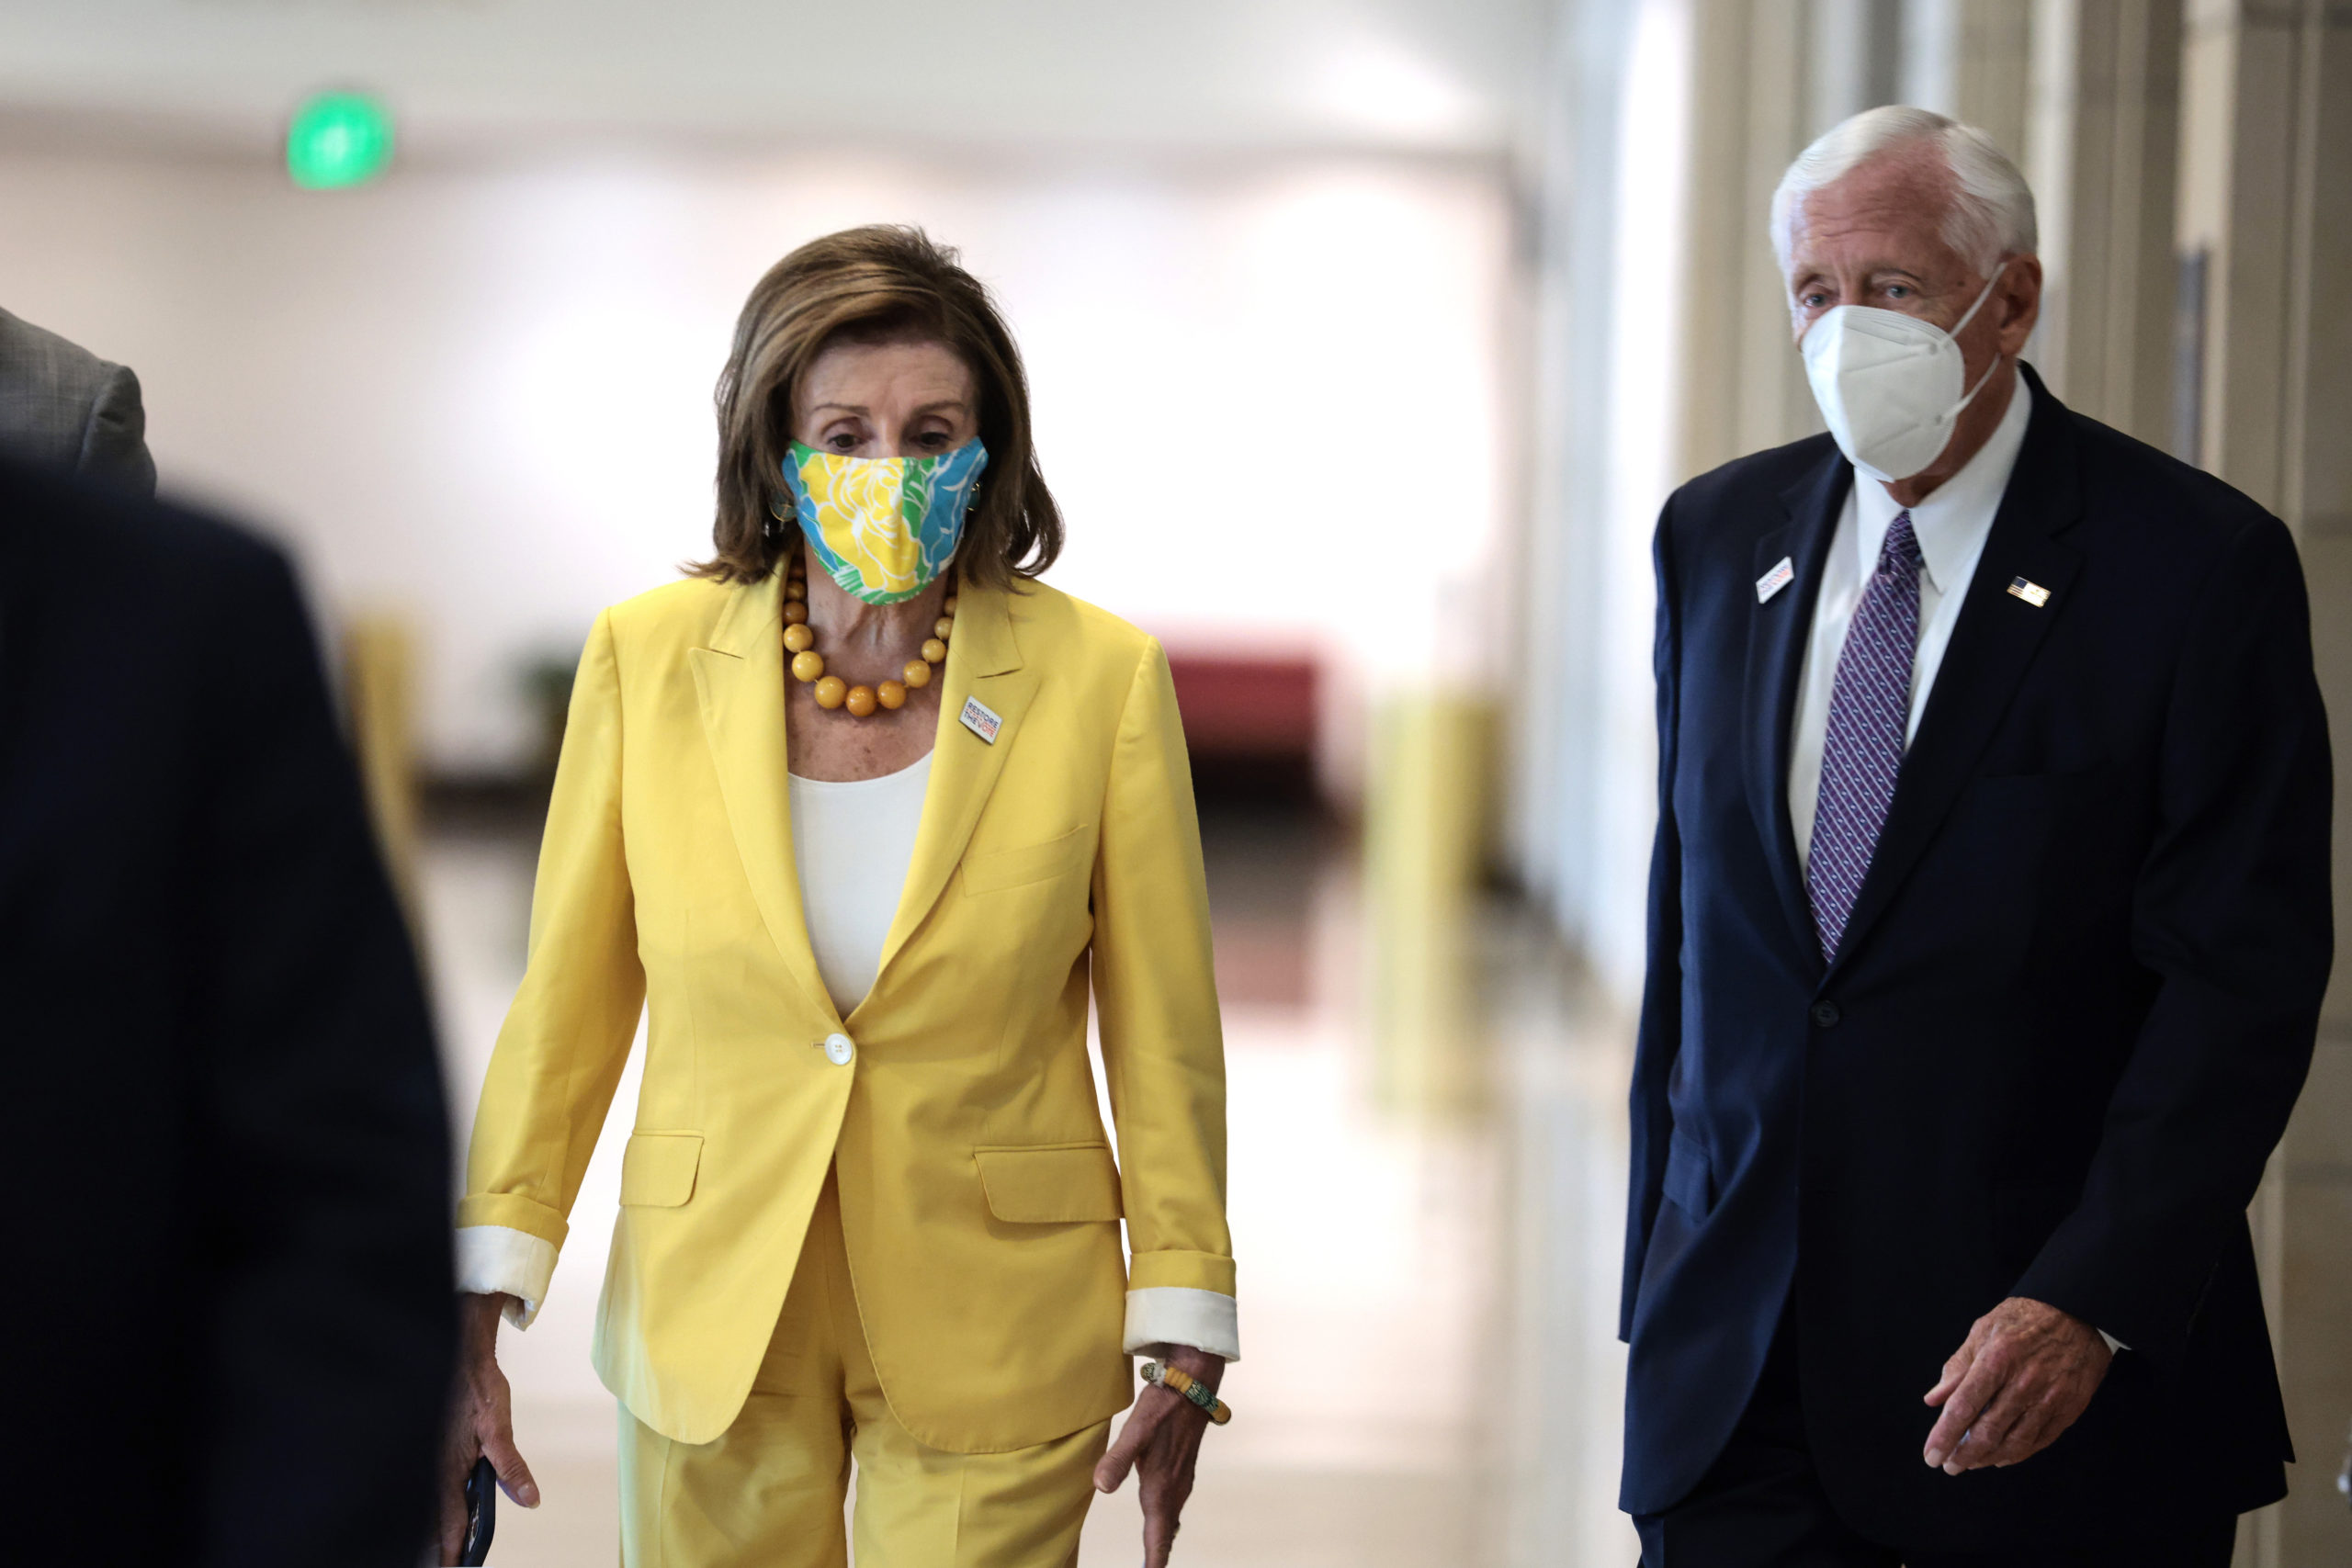 House Speaker Nancy Pelosi House Majority Leader Steny Hoyer walk through Capitol on Tuesday. (Anna Moneymaker/Getty Images)